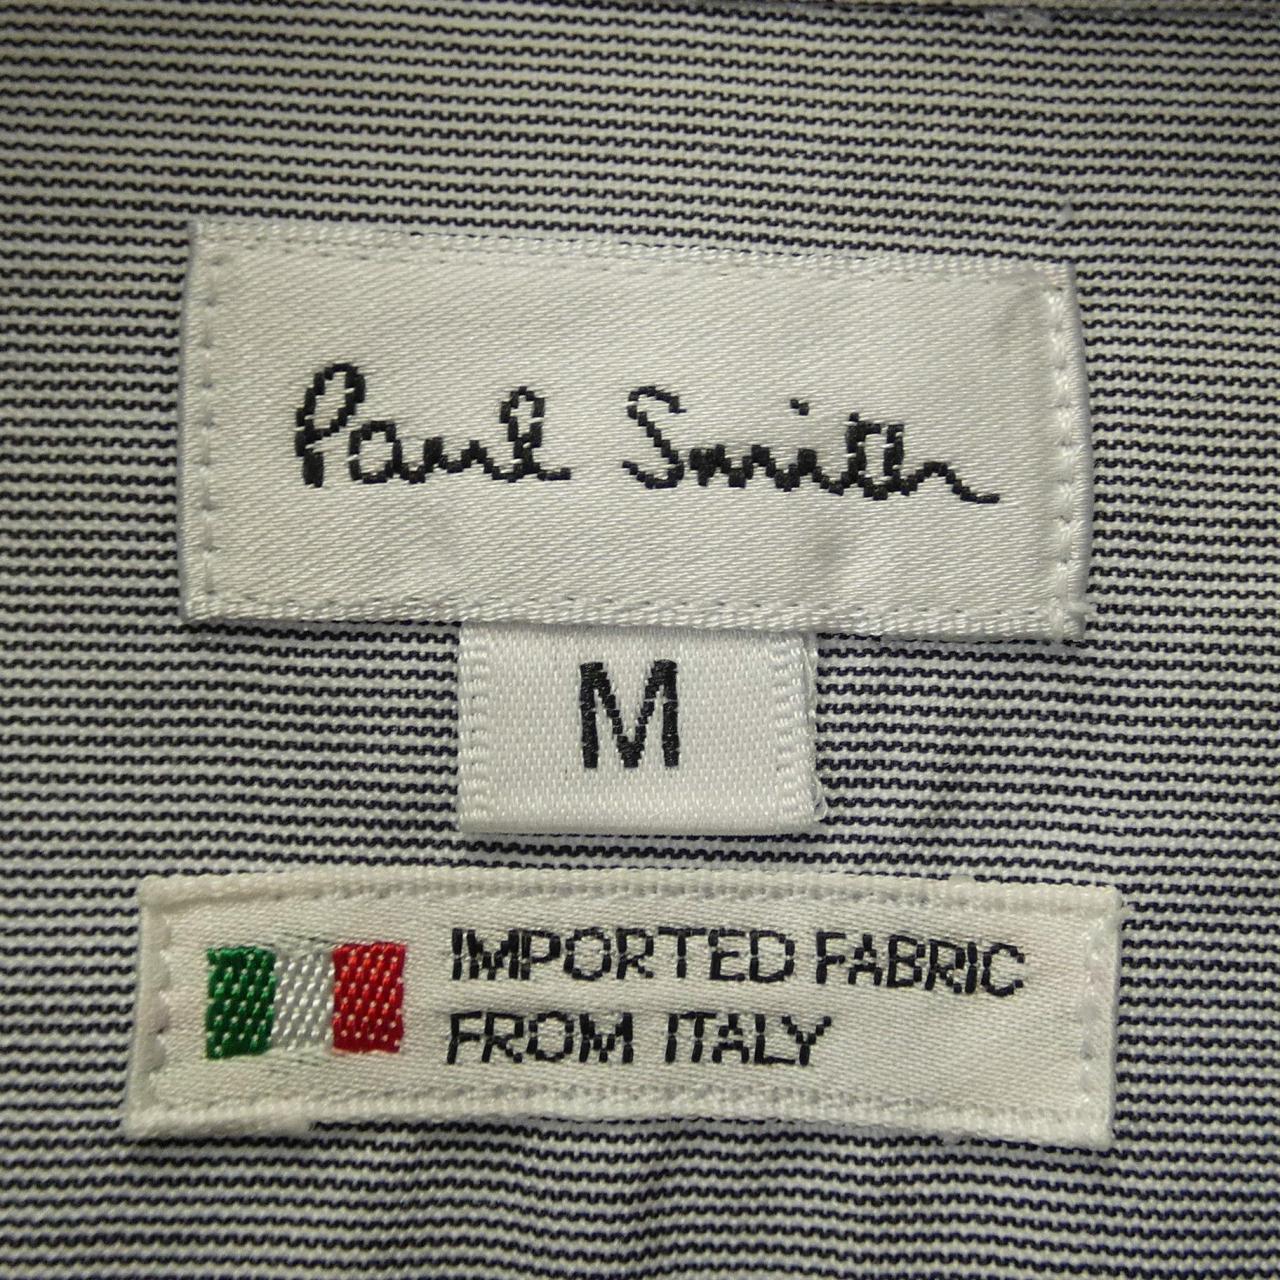 Paul Smith shirt